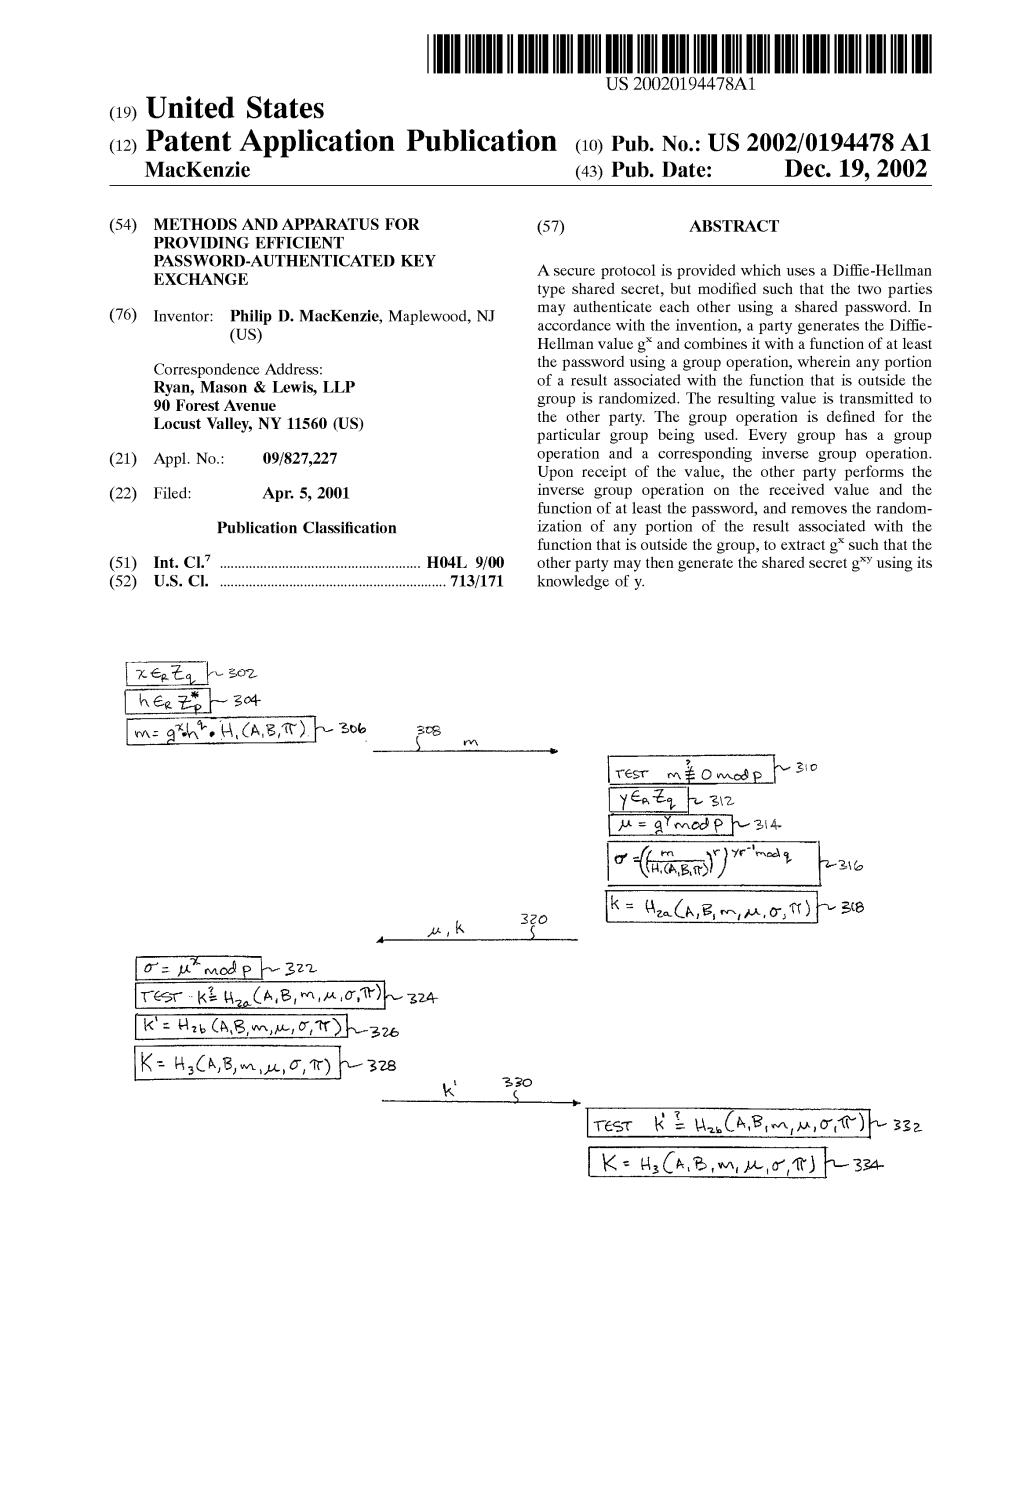 (12) Patent Application Publication (10) Pub. No.: US 2002/0194478 A1 Mackenzie (43) Pub